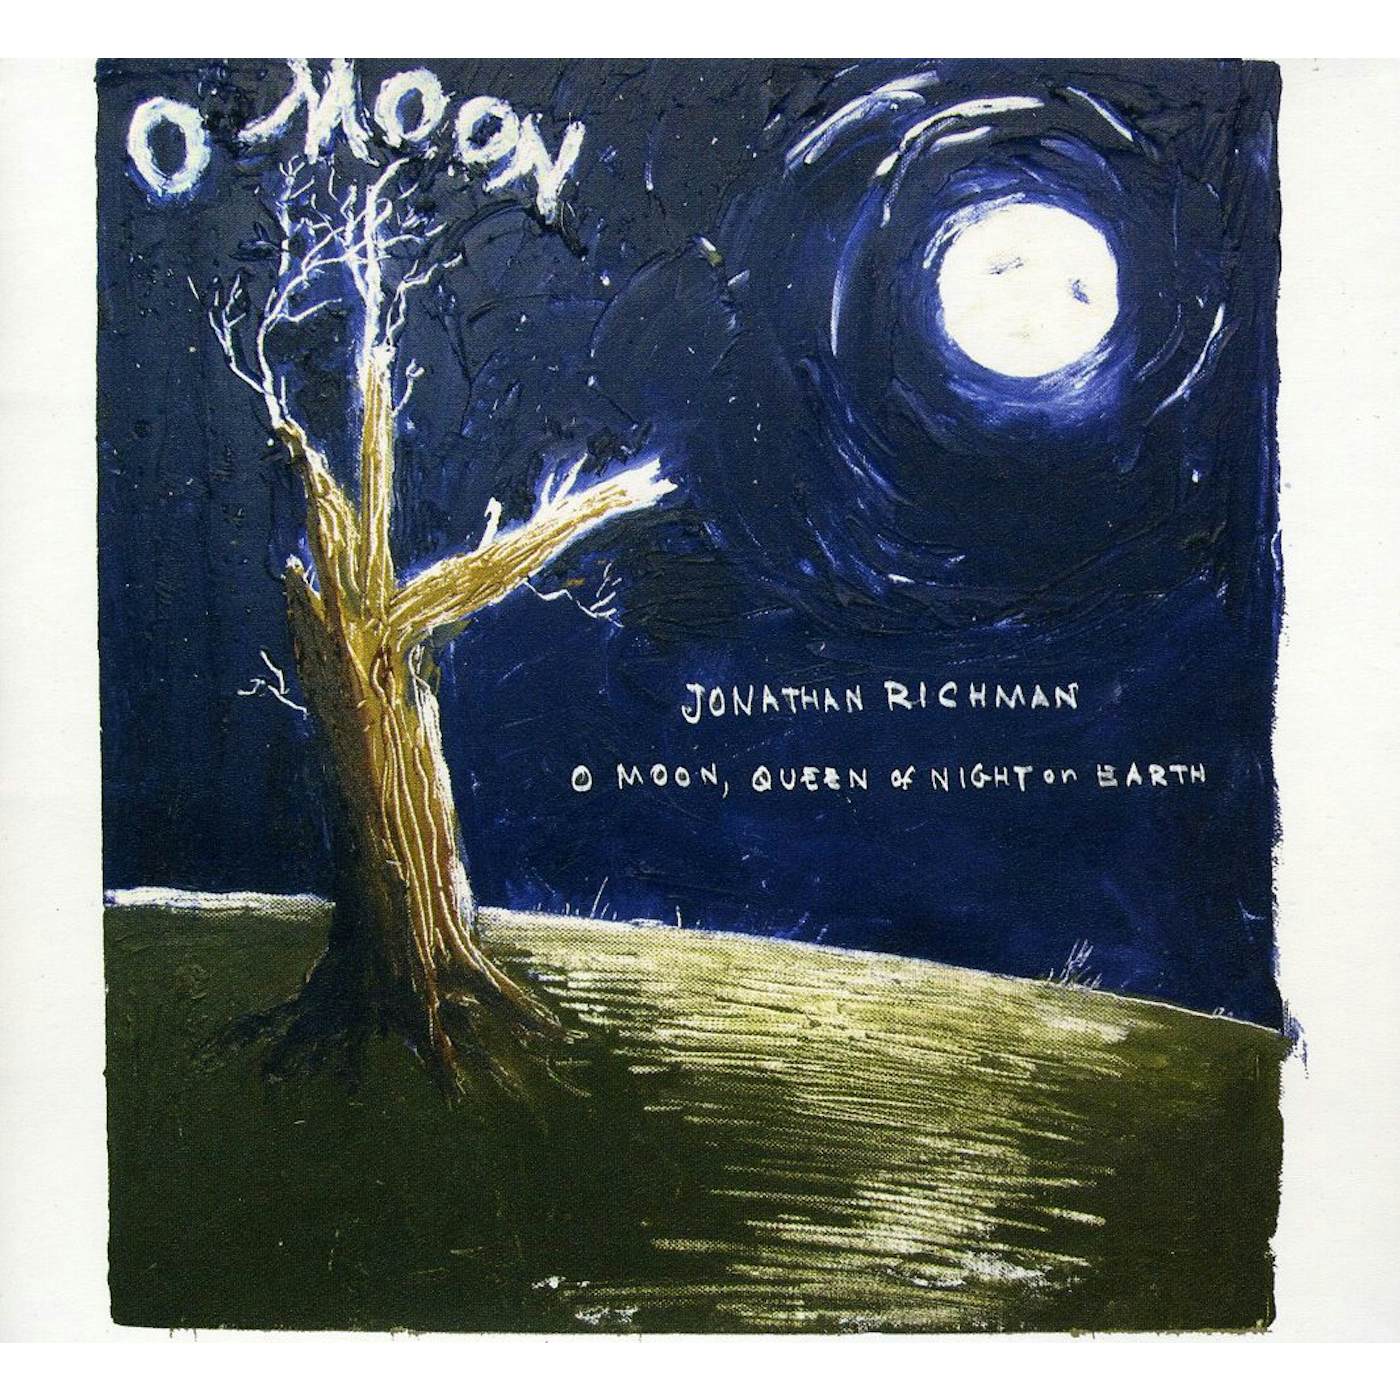 Jonathan Richman O MOON QUEEN OF NIGHT ON EARTH CD